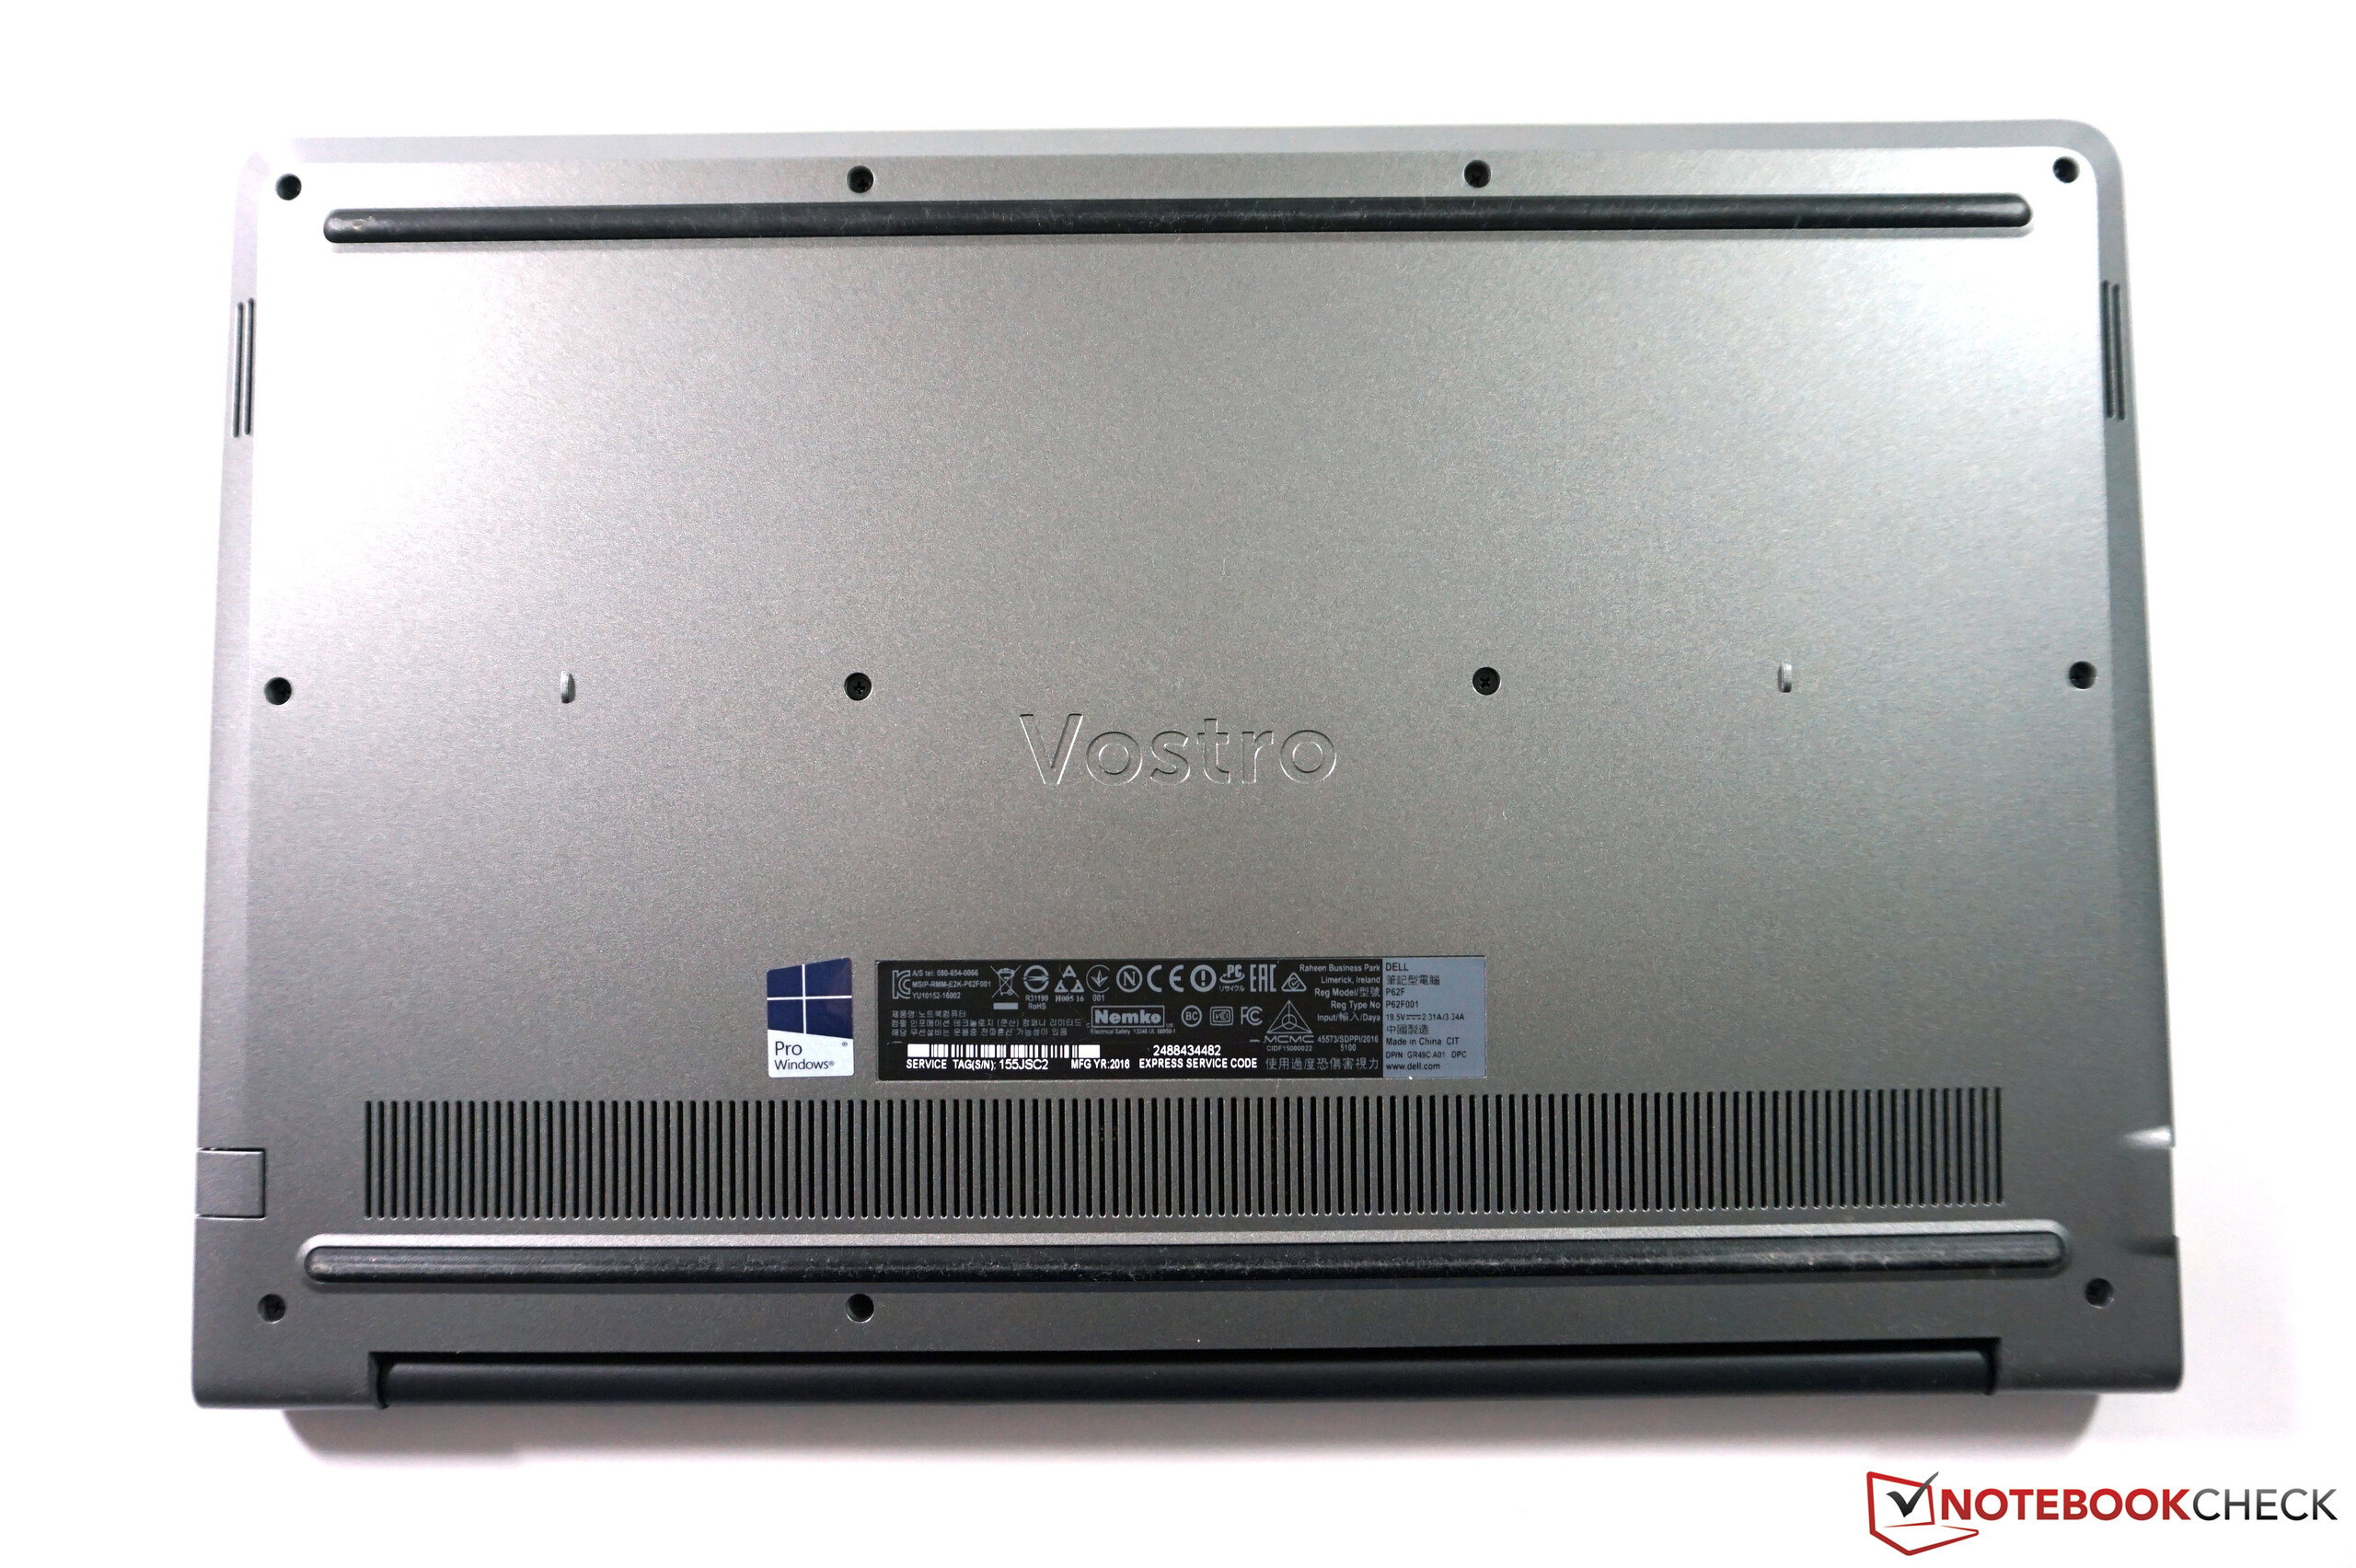 Dell Vostro 15 5568 (Core i5-7200U, Full-HD, 2017) Notebook Review 